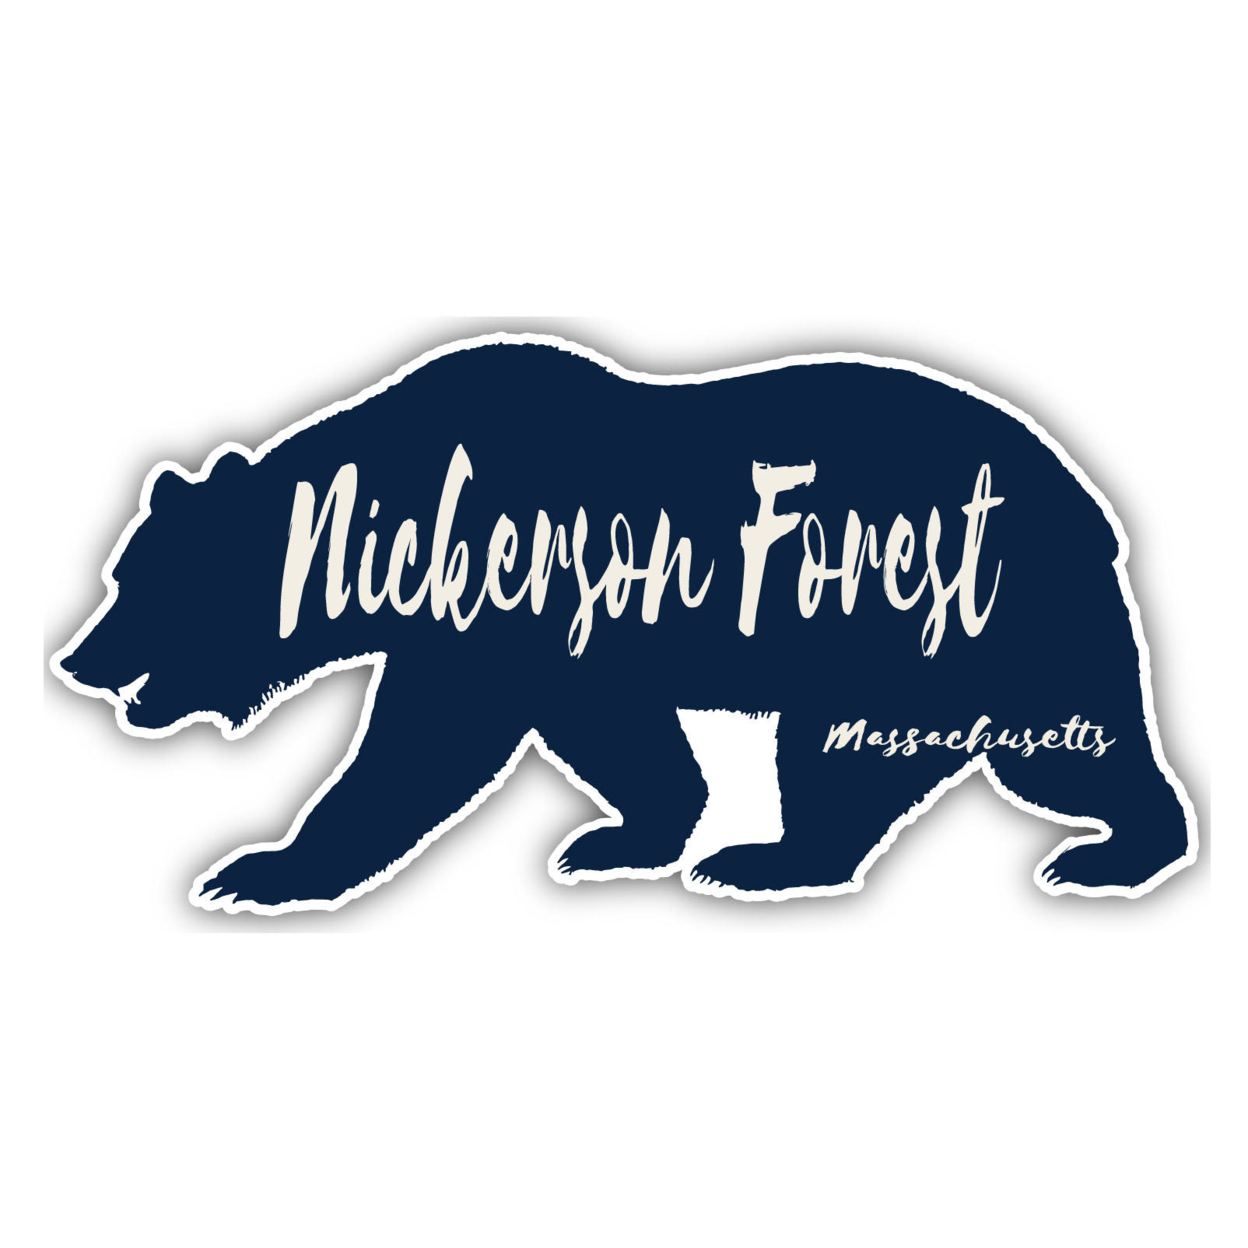 Nickerson Forest Massachusetts Souvenir Decorative Stickers (Choose Theme And Size) - Single Unit, 4-Inch, Bear